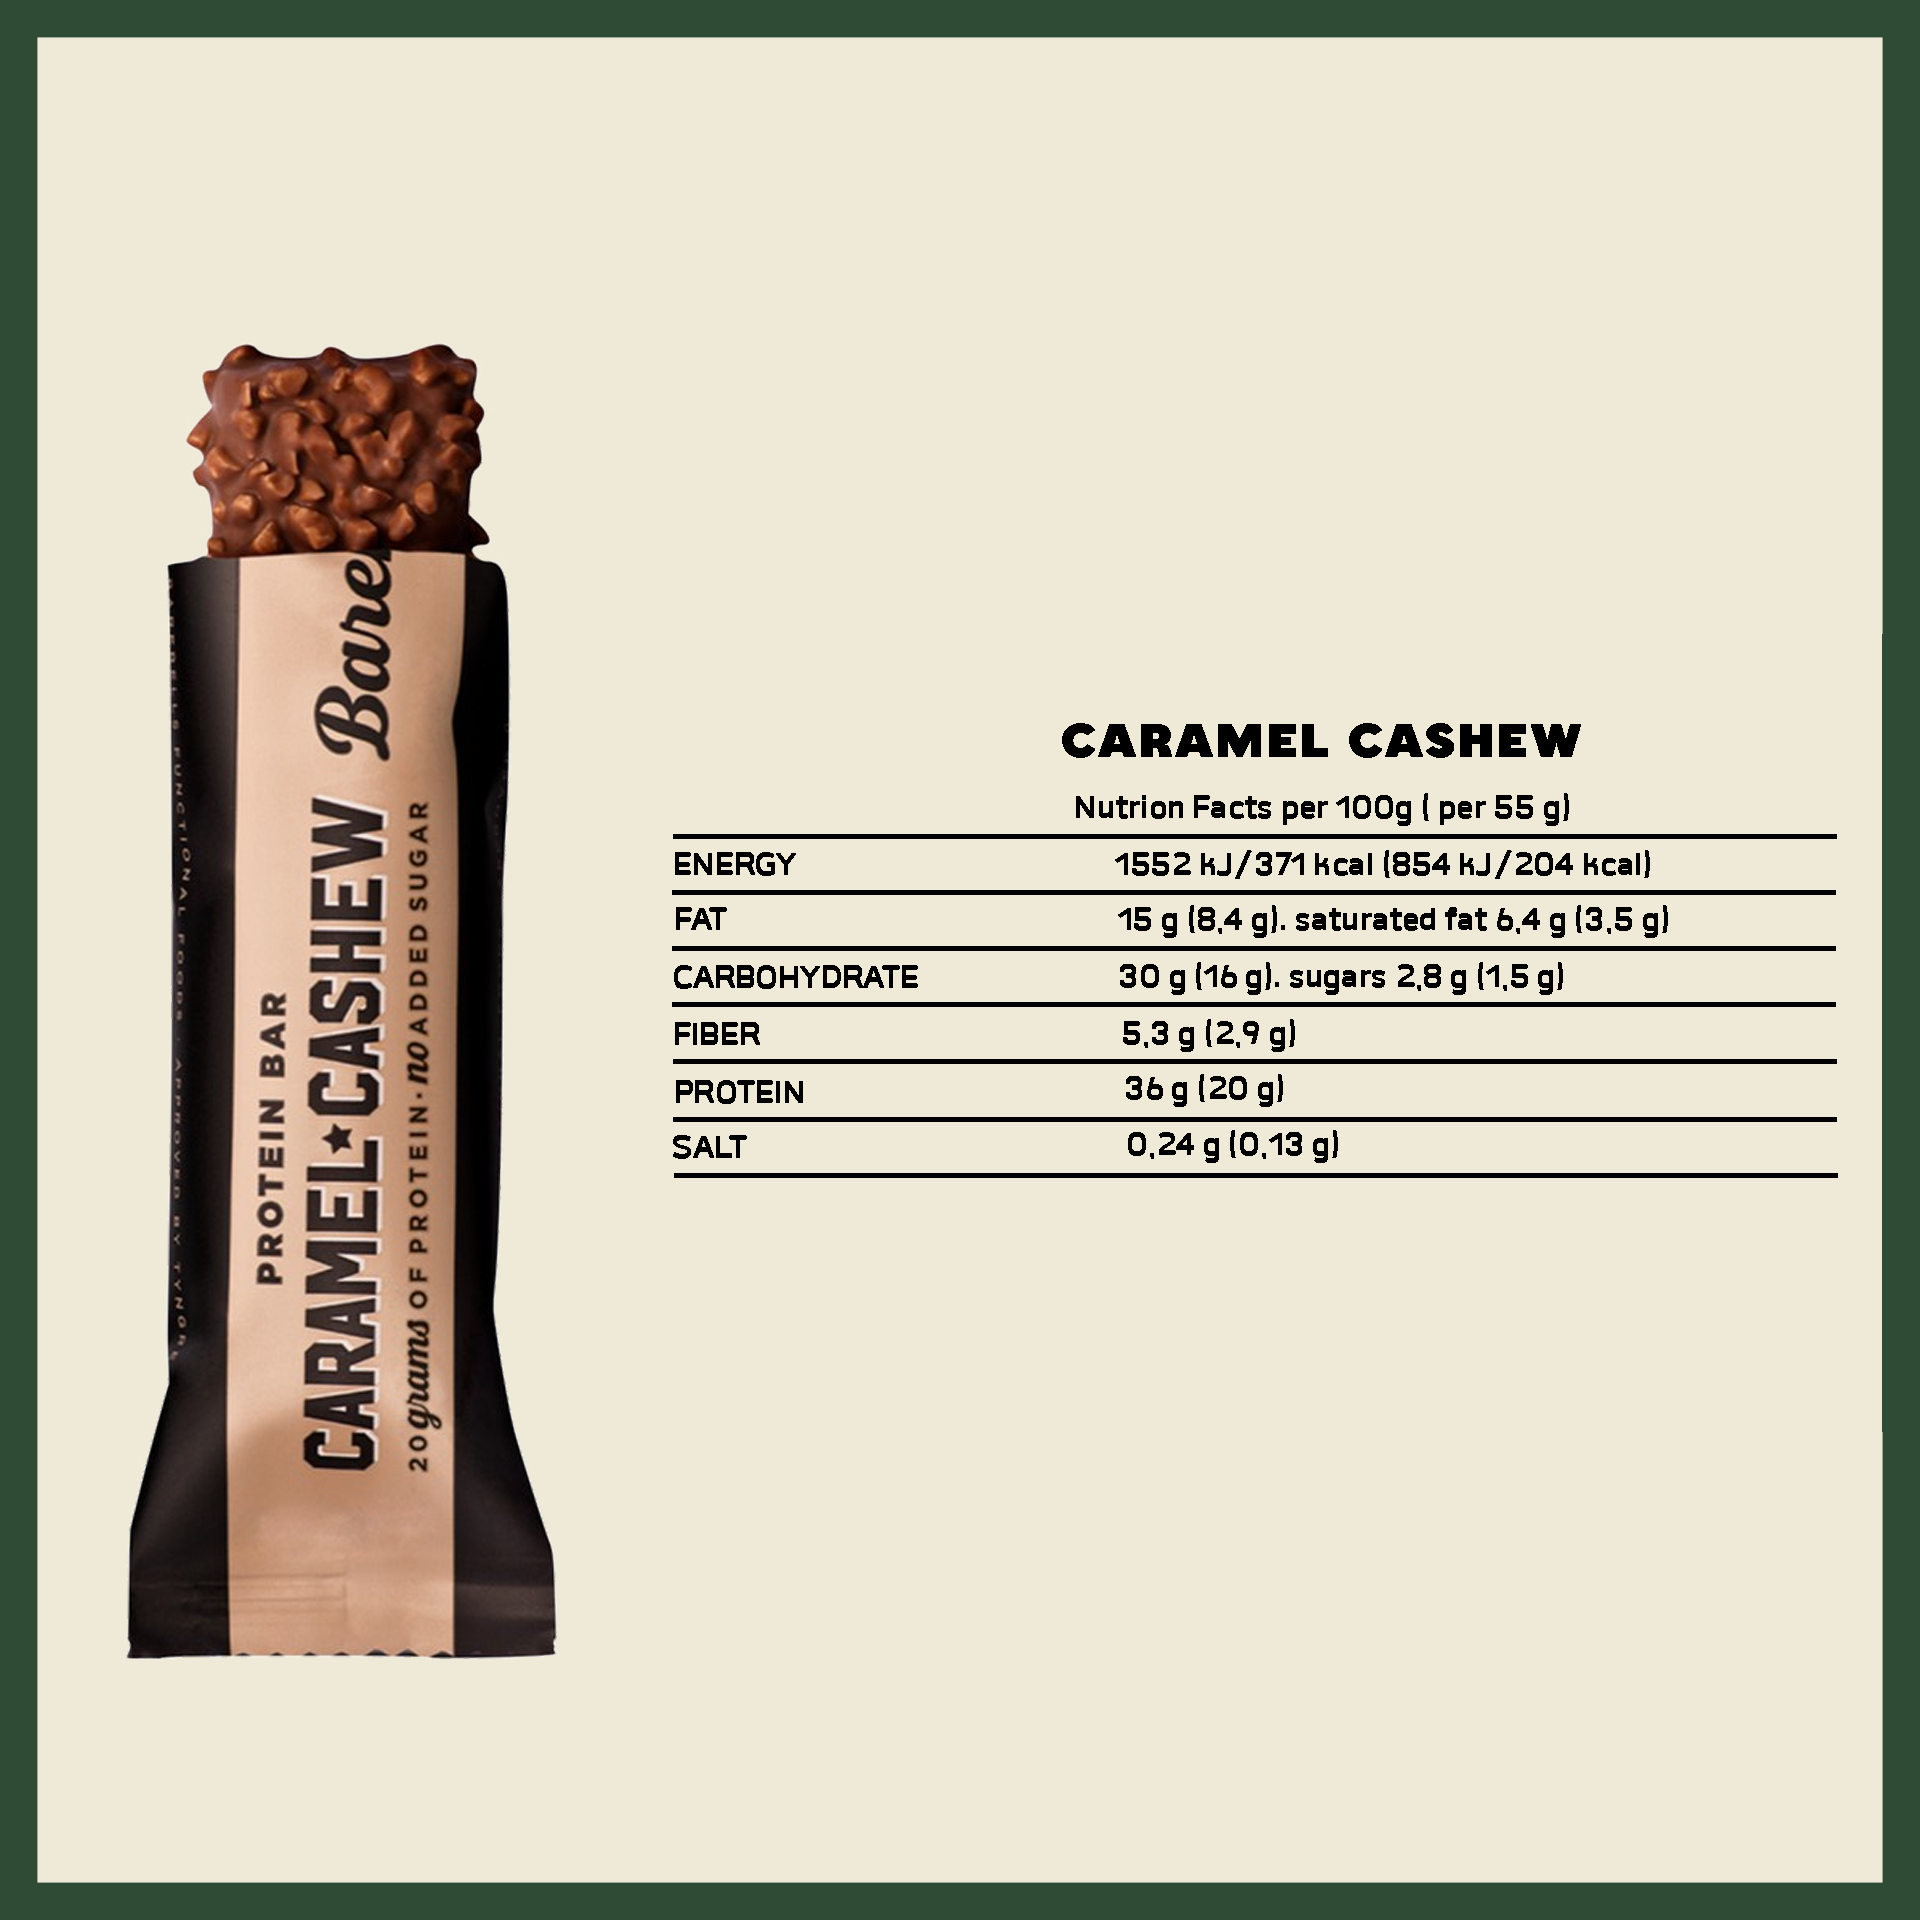 Ultimate Bundle - Barebells Protein Bar Caramel Cashew – NutriQuick